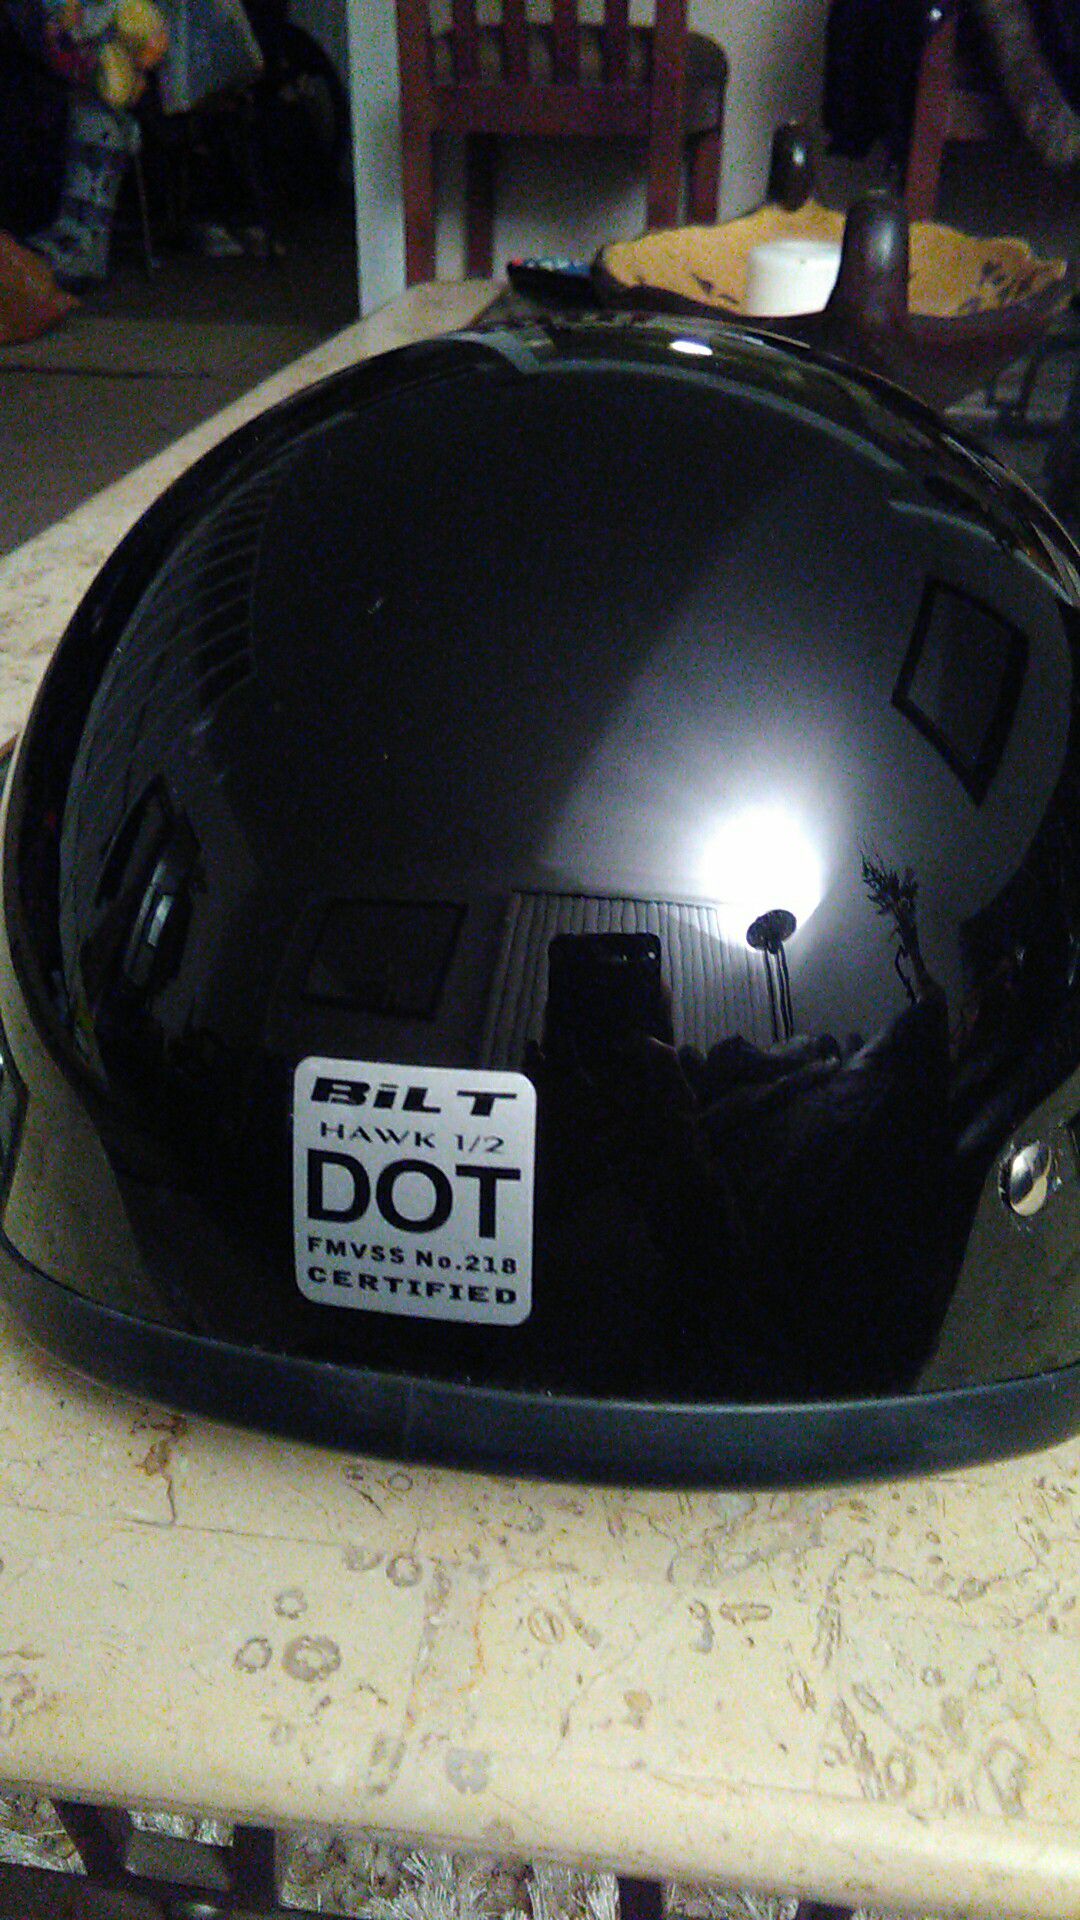 B i l t DOT approved half Dome helmet brand new